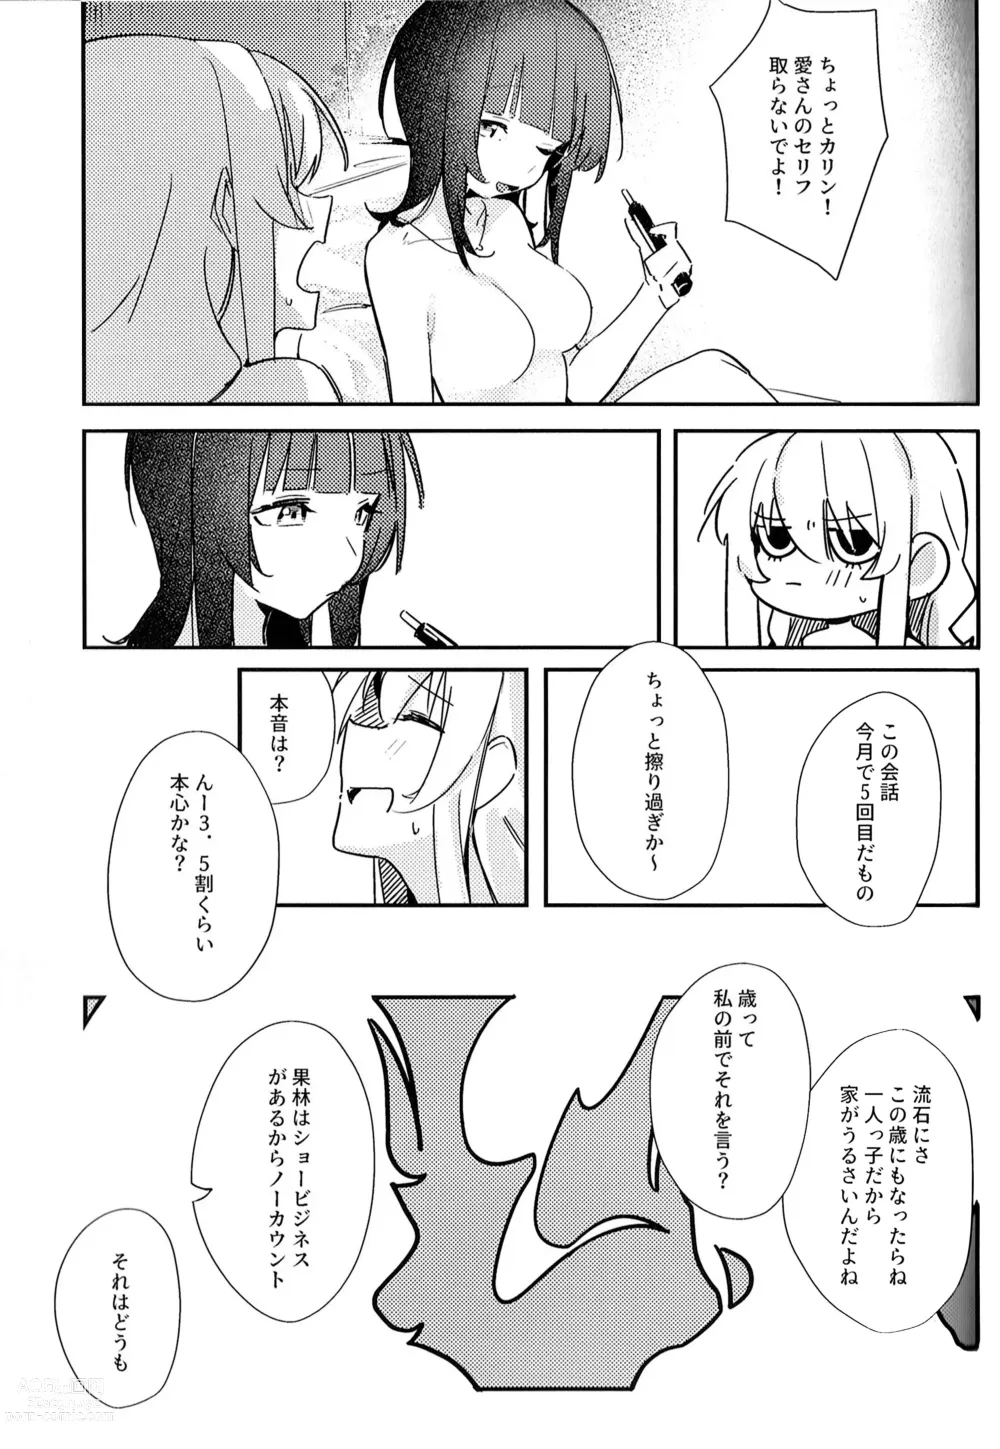 Page 7 of doujinshi MIRROR